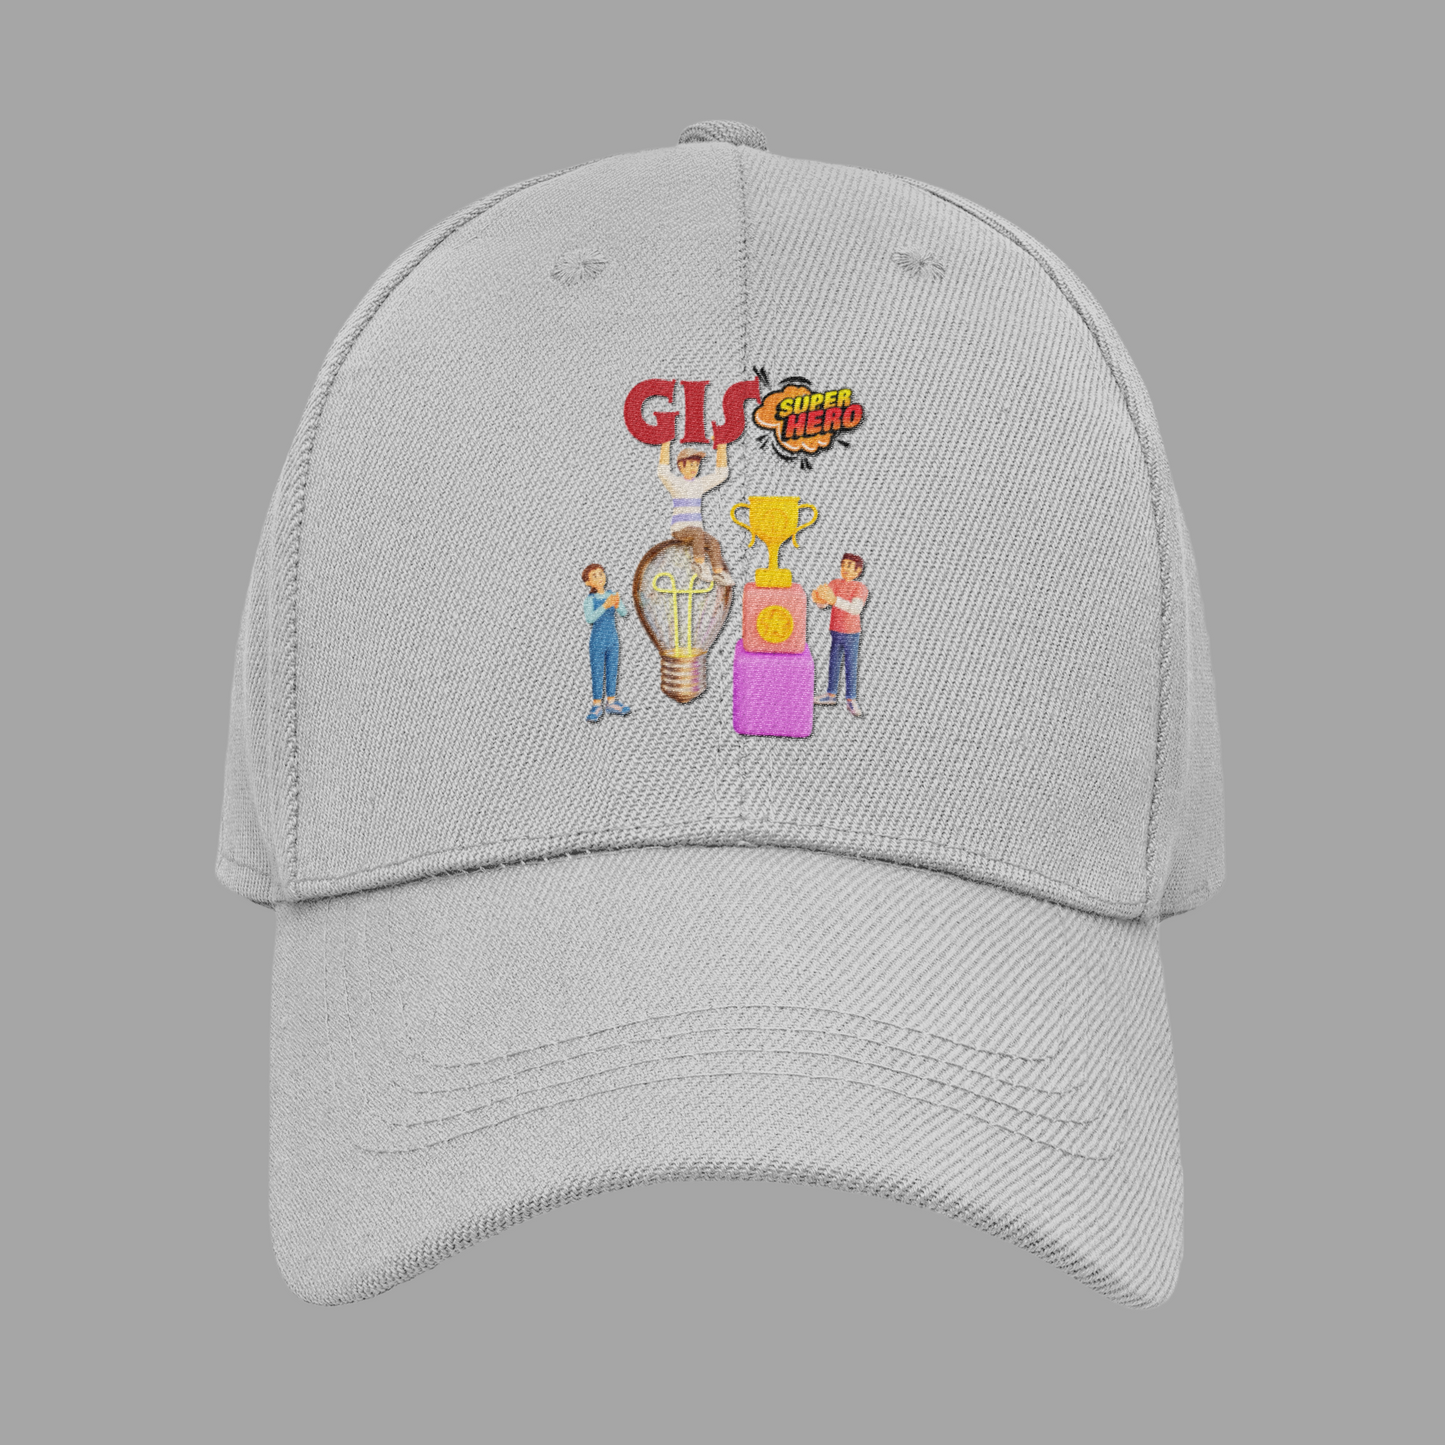 GIS Super Hero CAP